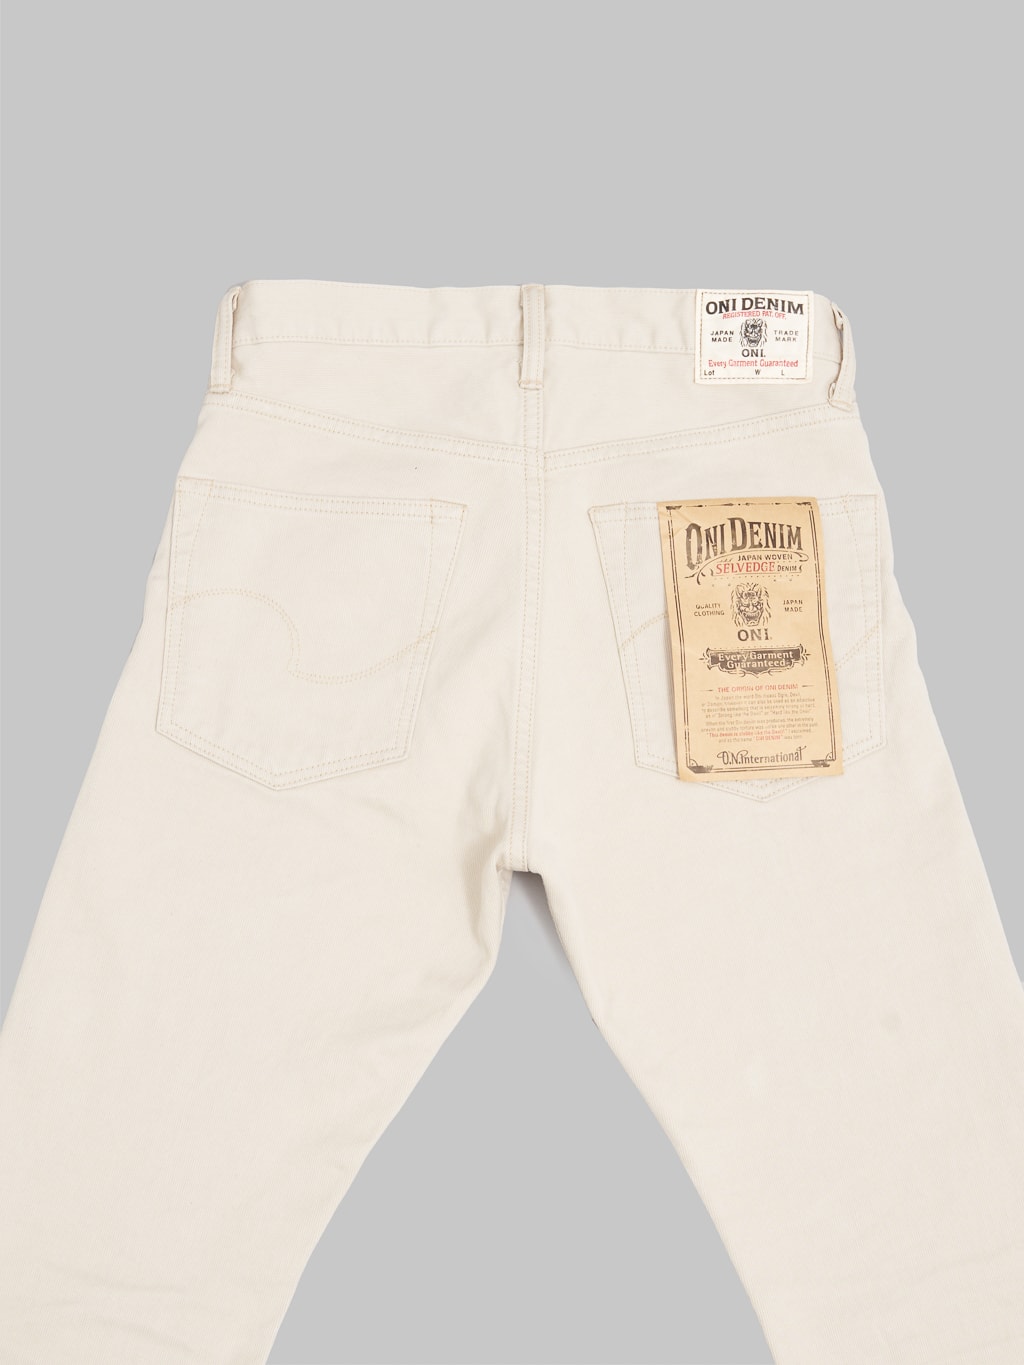 oni denim 216 california pique sand beige neat straight jeans back details